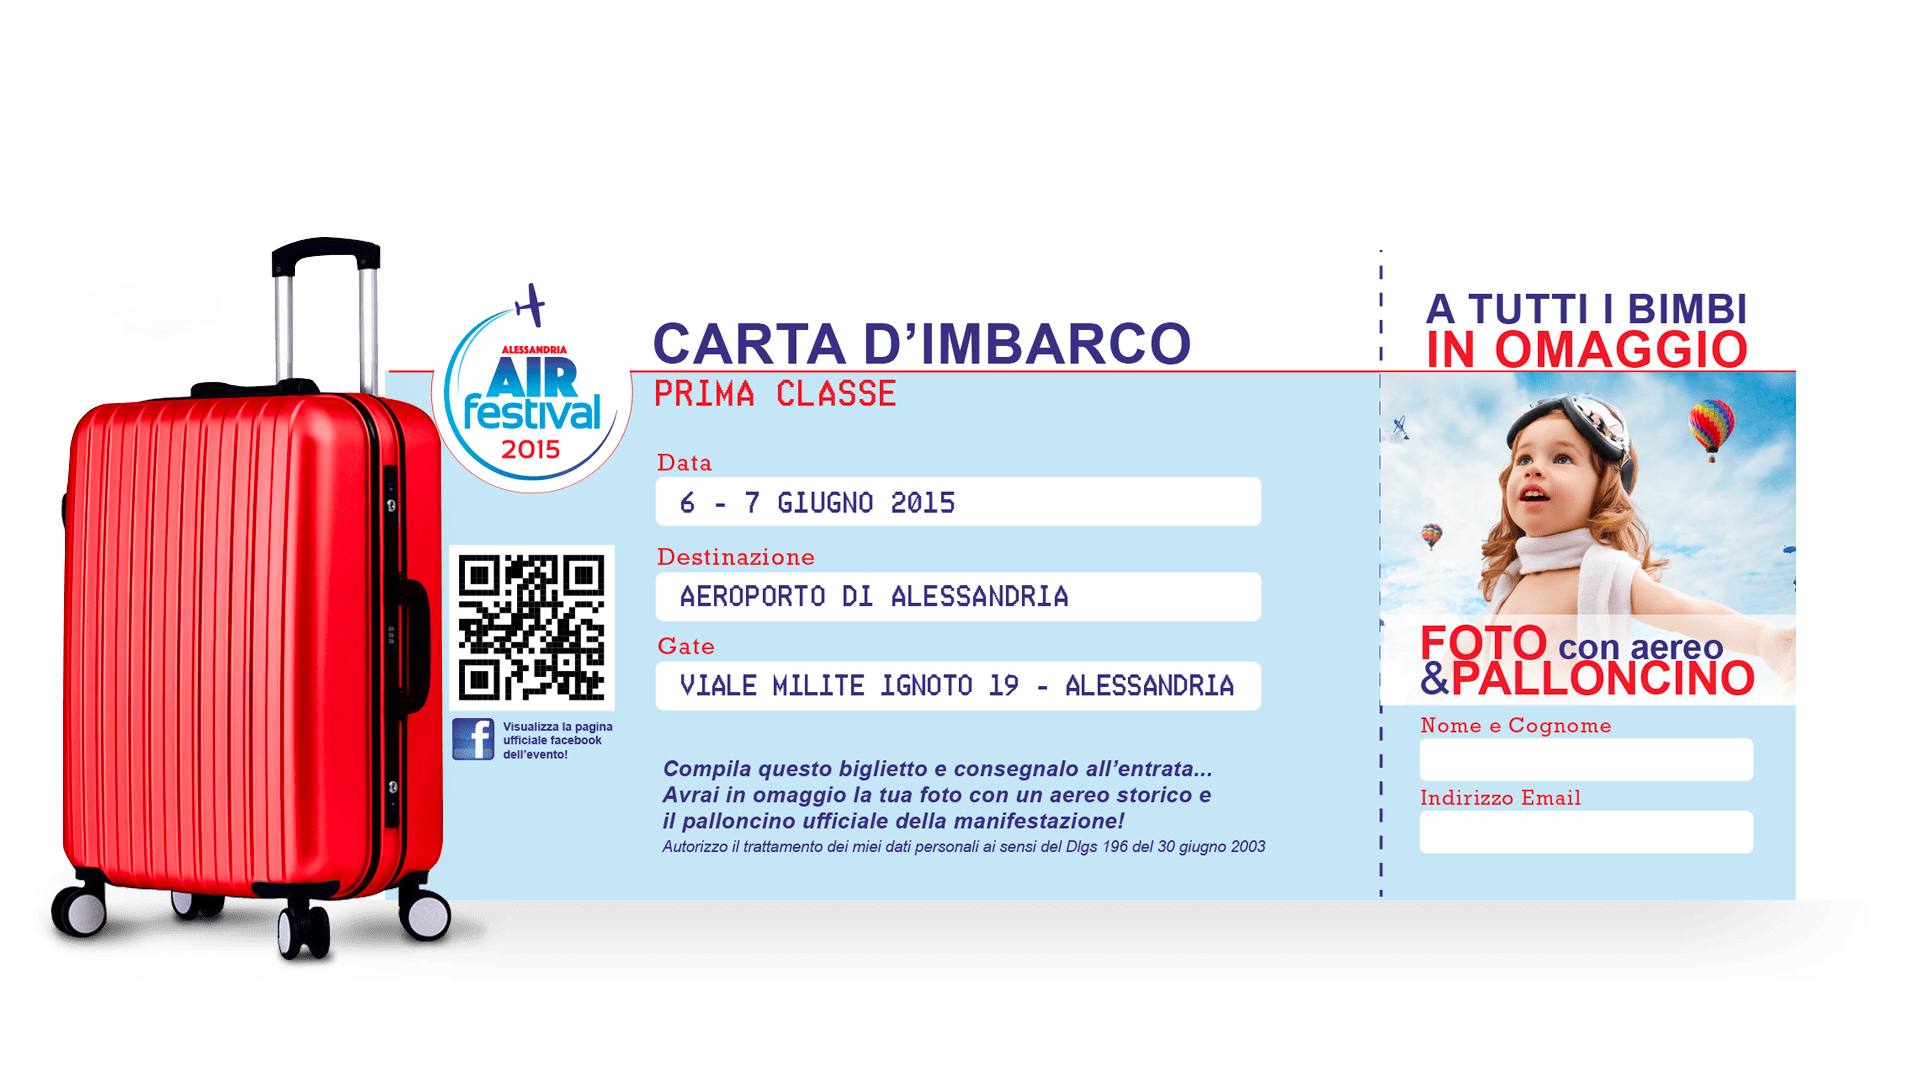 Air Festival Ticket Invitations Design